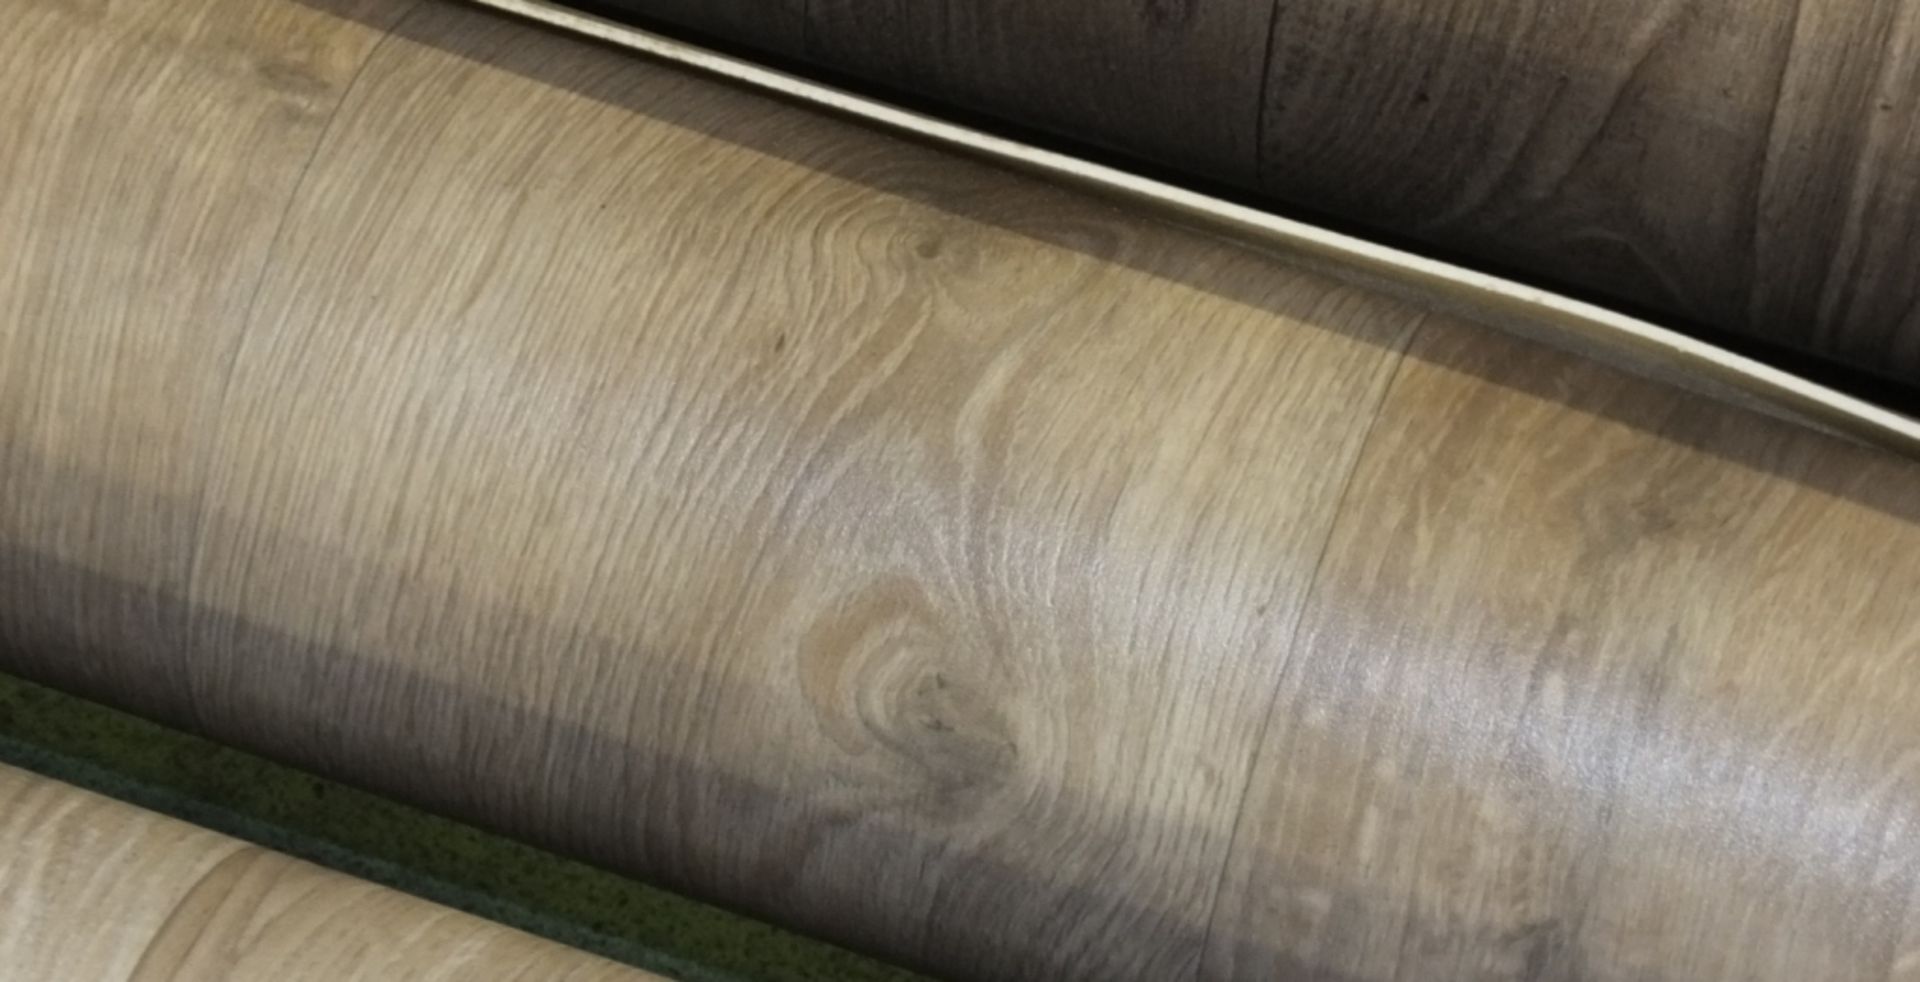 Wood Effect Vinyl Flooring - Approx 4M x 4M - Image 2 of 2